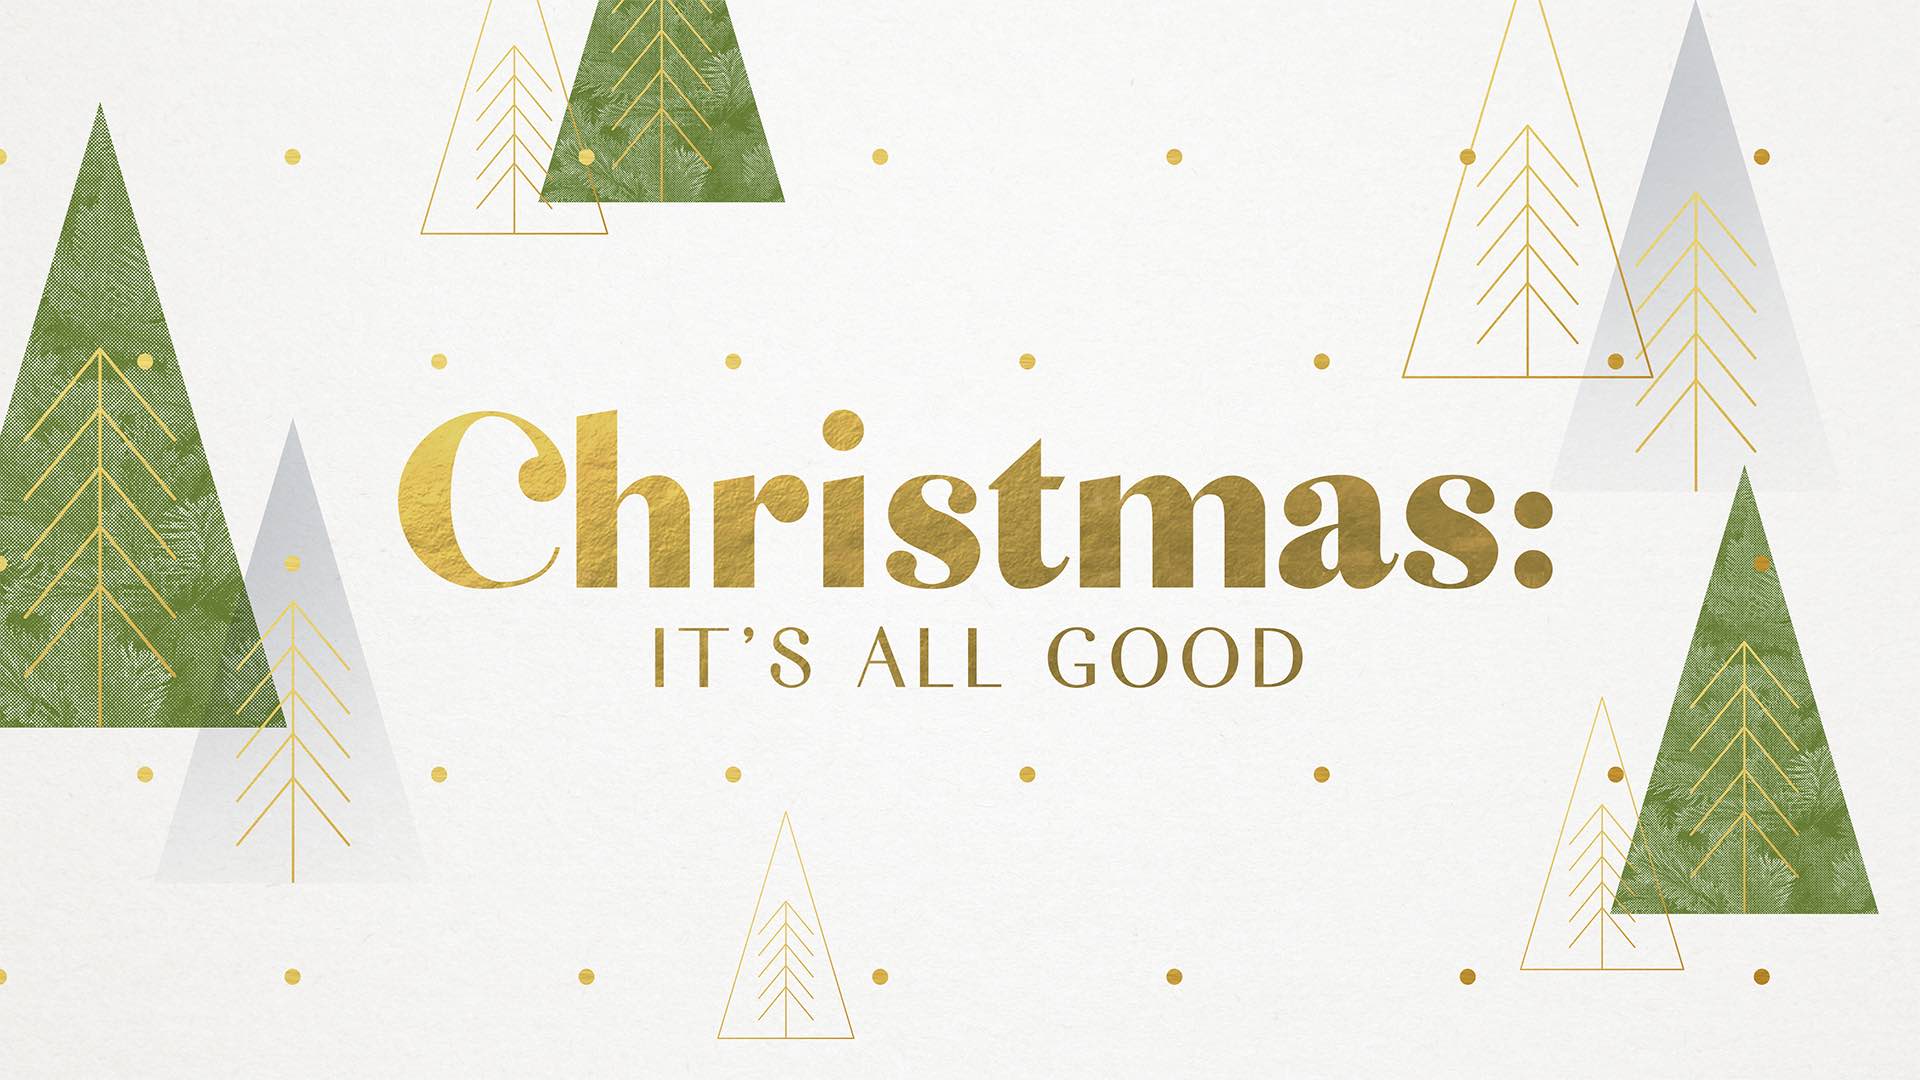 Christmas: It's All Good